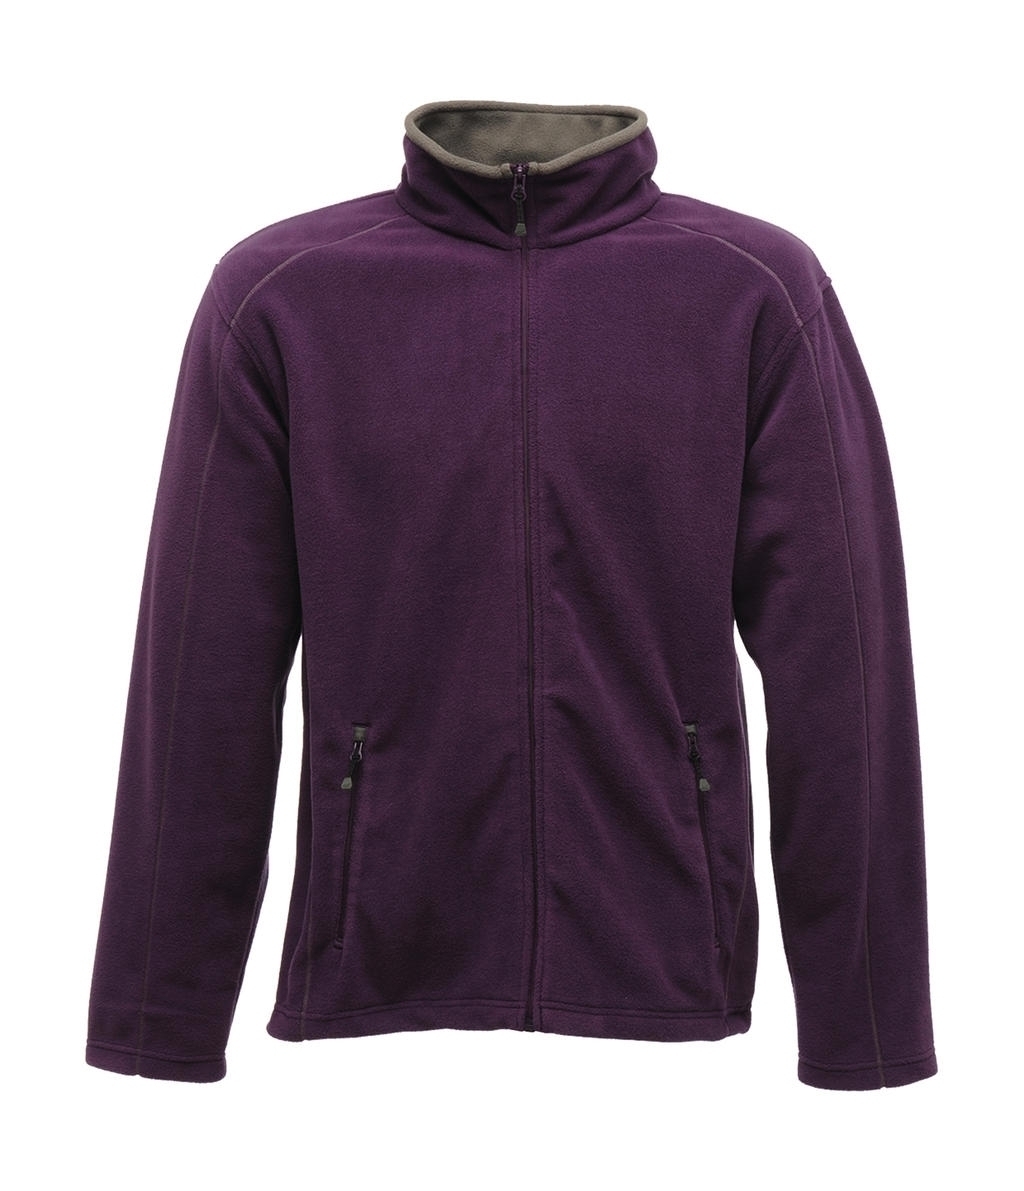 Adamsville Full Zip Fleece Majestic Purple/Smokey Rose